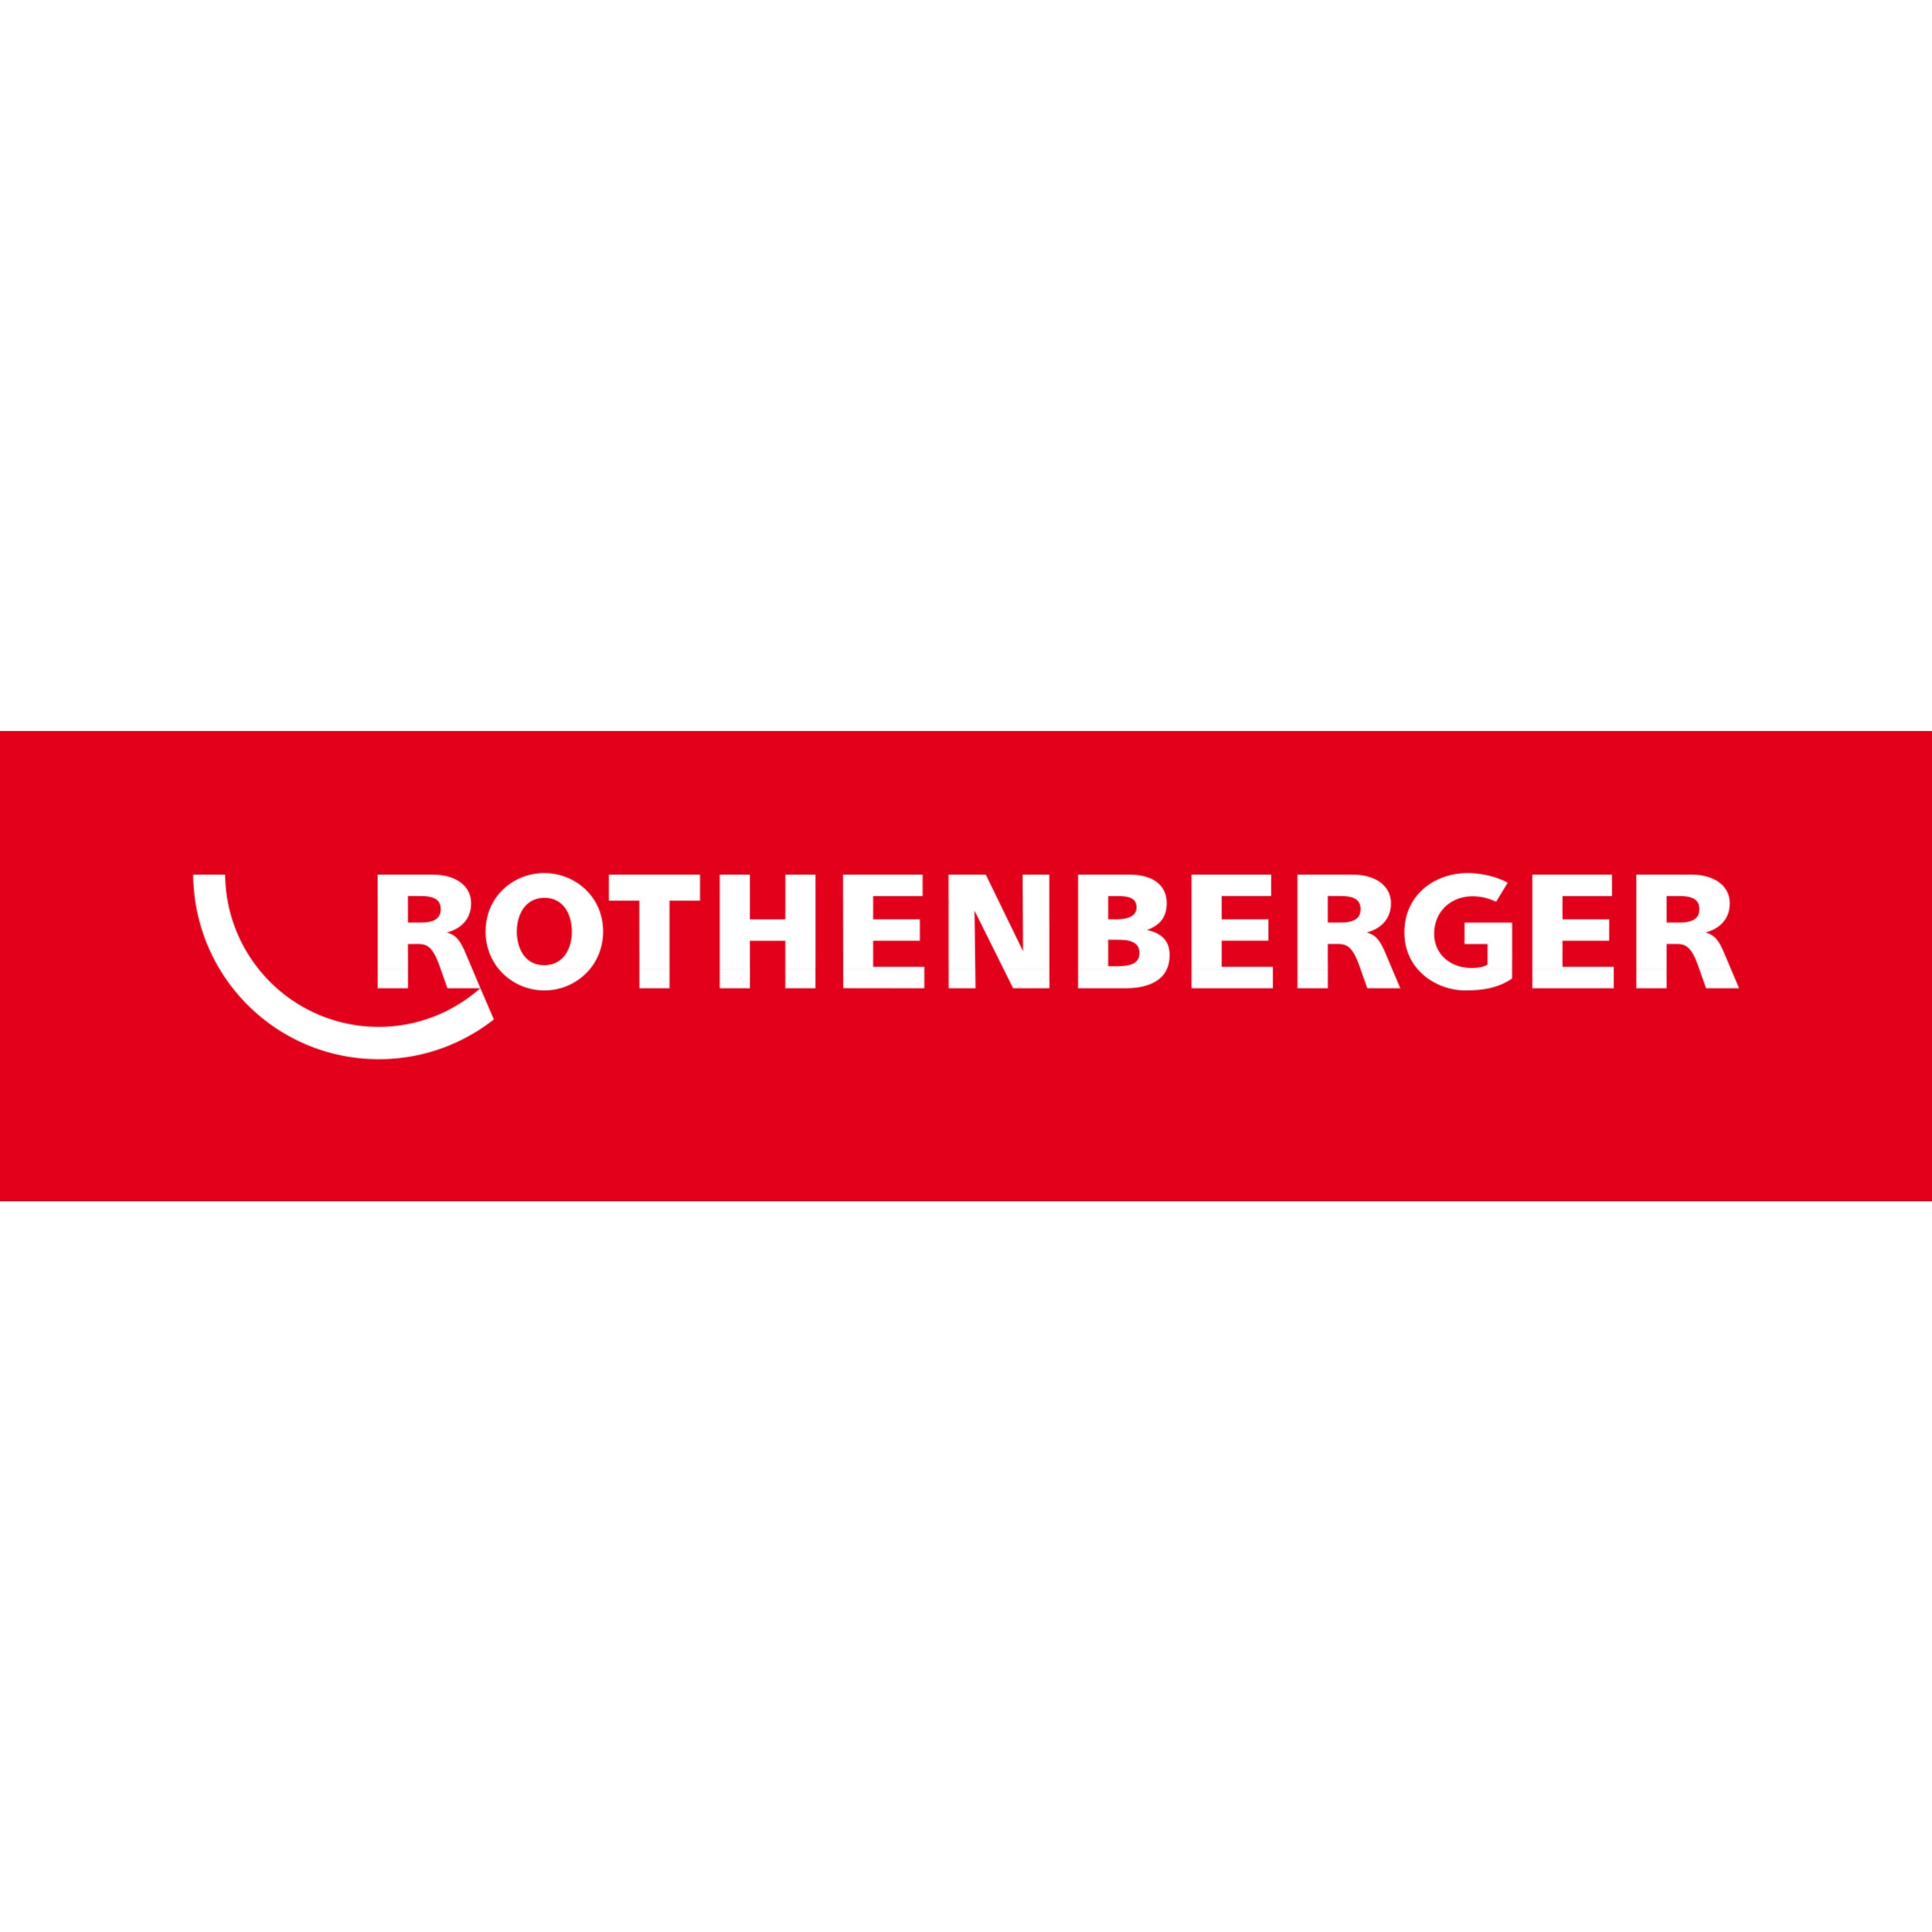 ROTHENBERGUER07